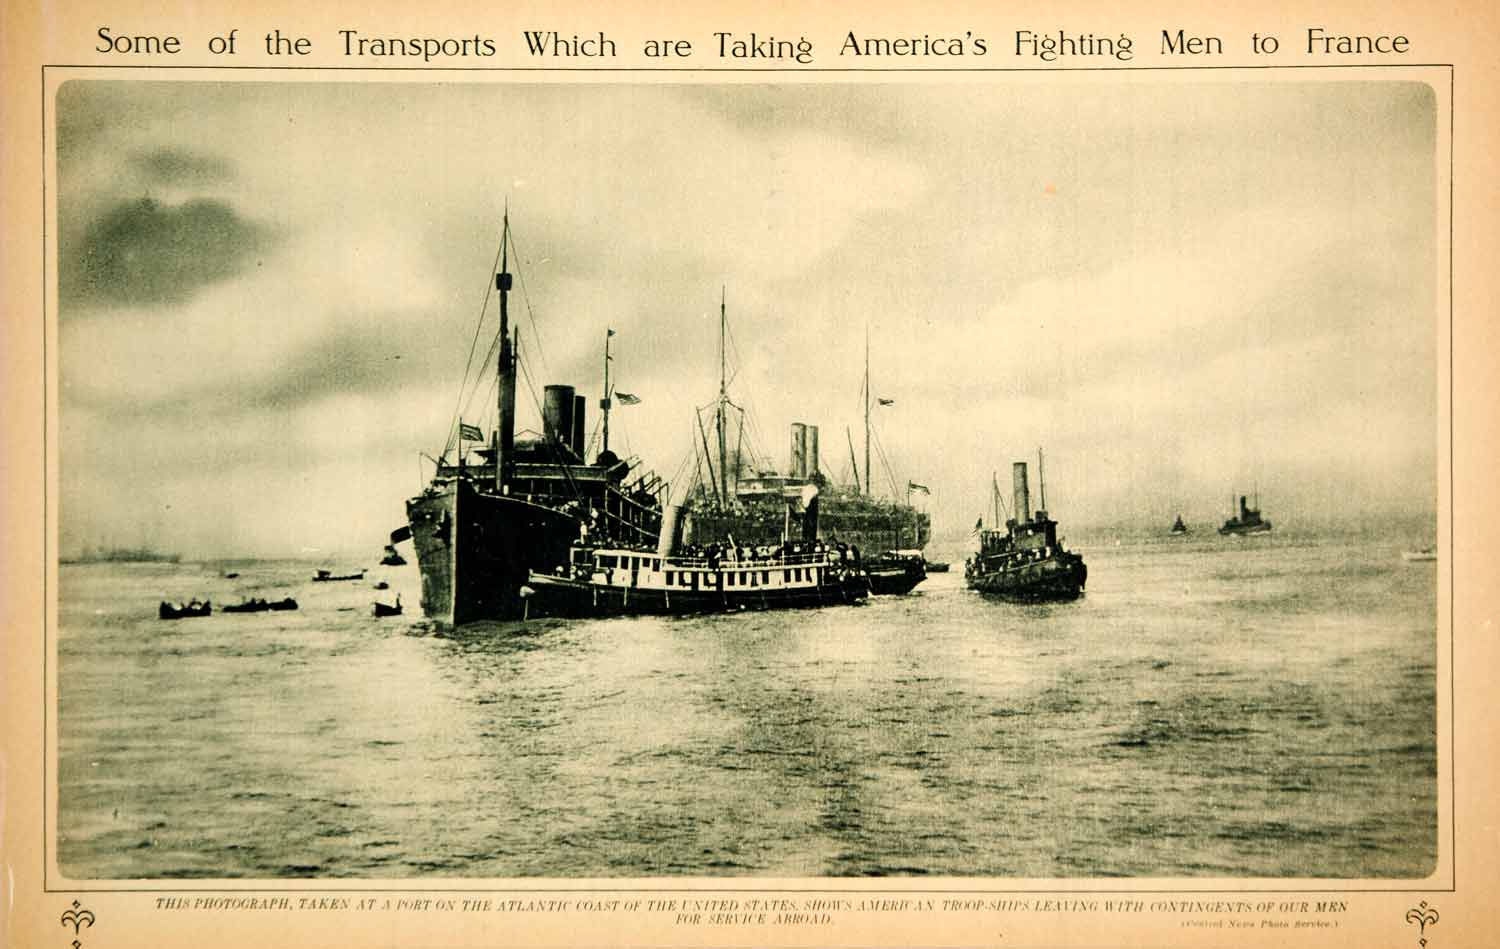 1917 Rotogravure World War I U. S. Troop Transports Ships Atlantic Ocean YNY3